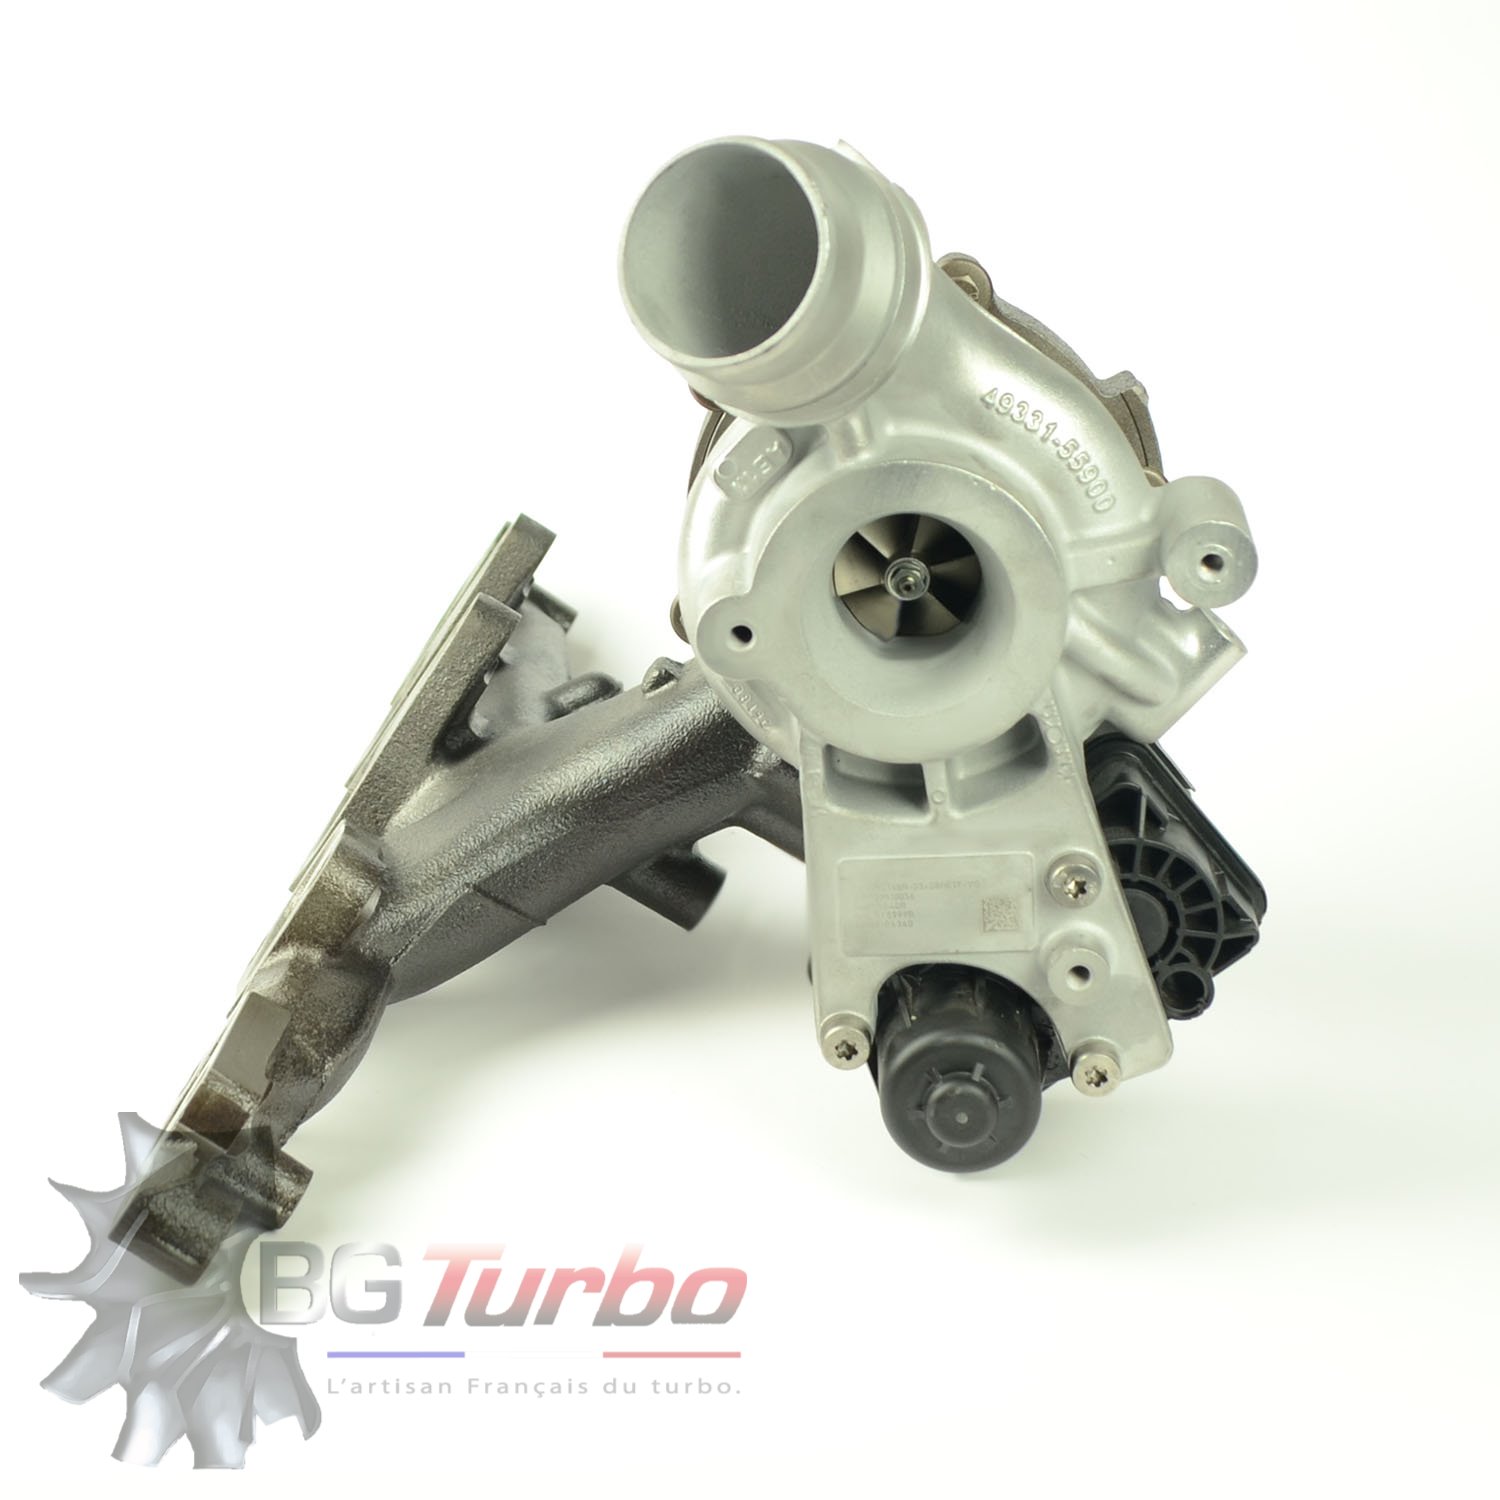 Turbo TURBO MITSUBISHI TD025 NEUF - MERCEDES NISSAN RENAULT VITO XTRAIL SCENIC TALISMAN 1,7 L 102 136 150 CV - 4918004350
